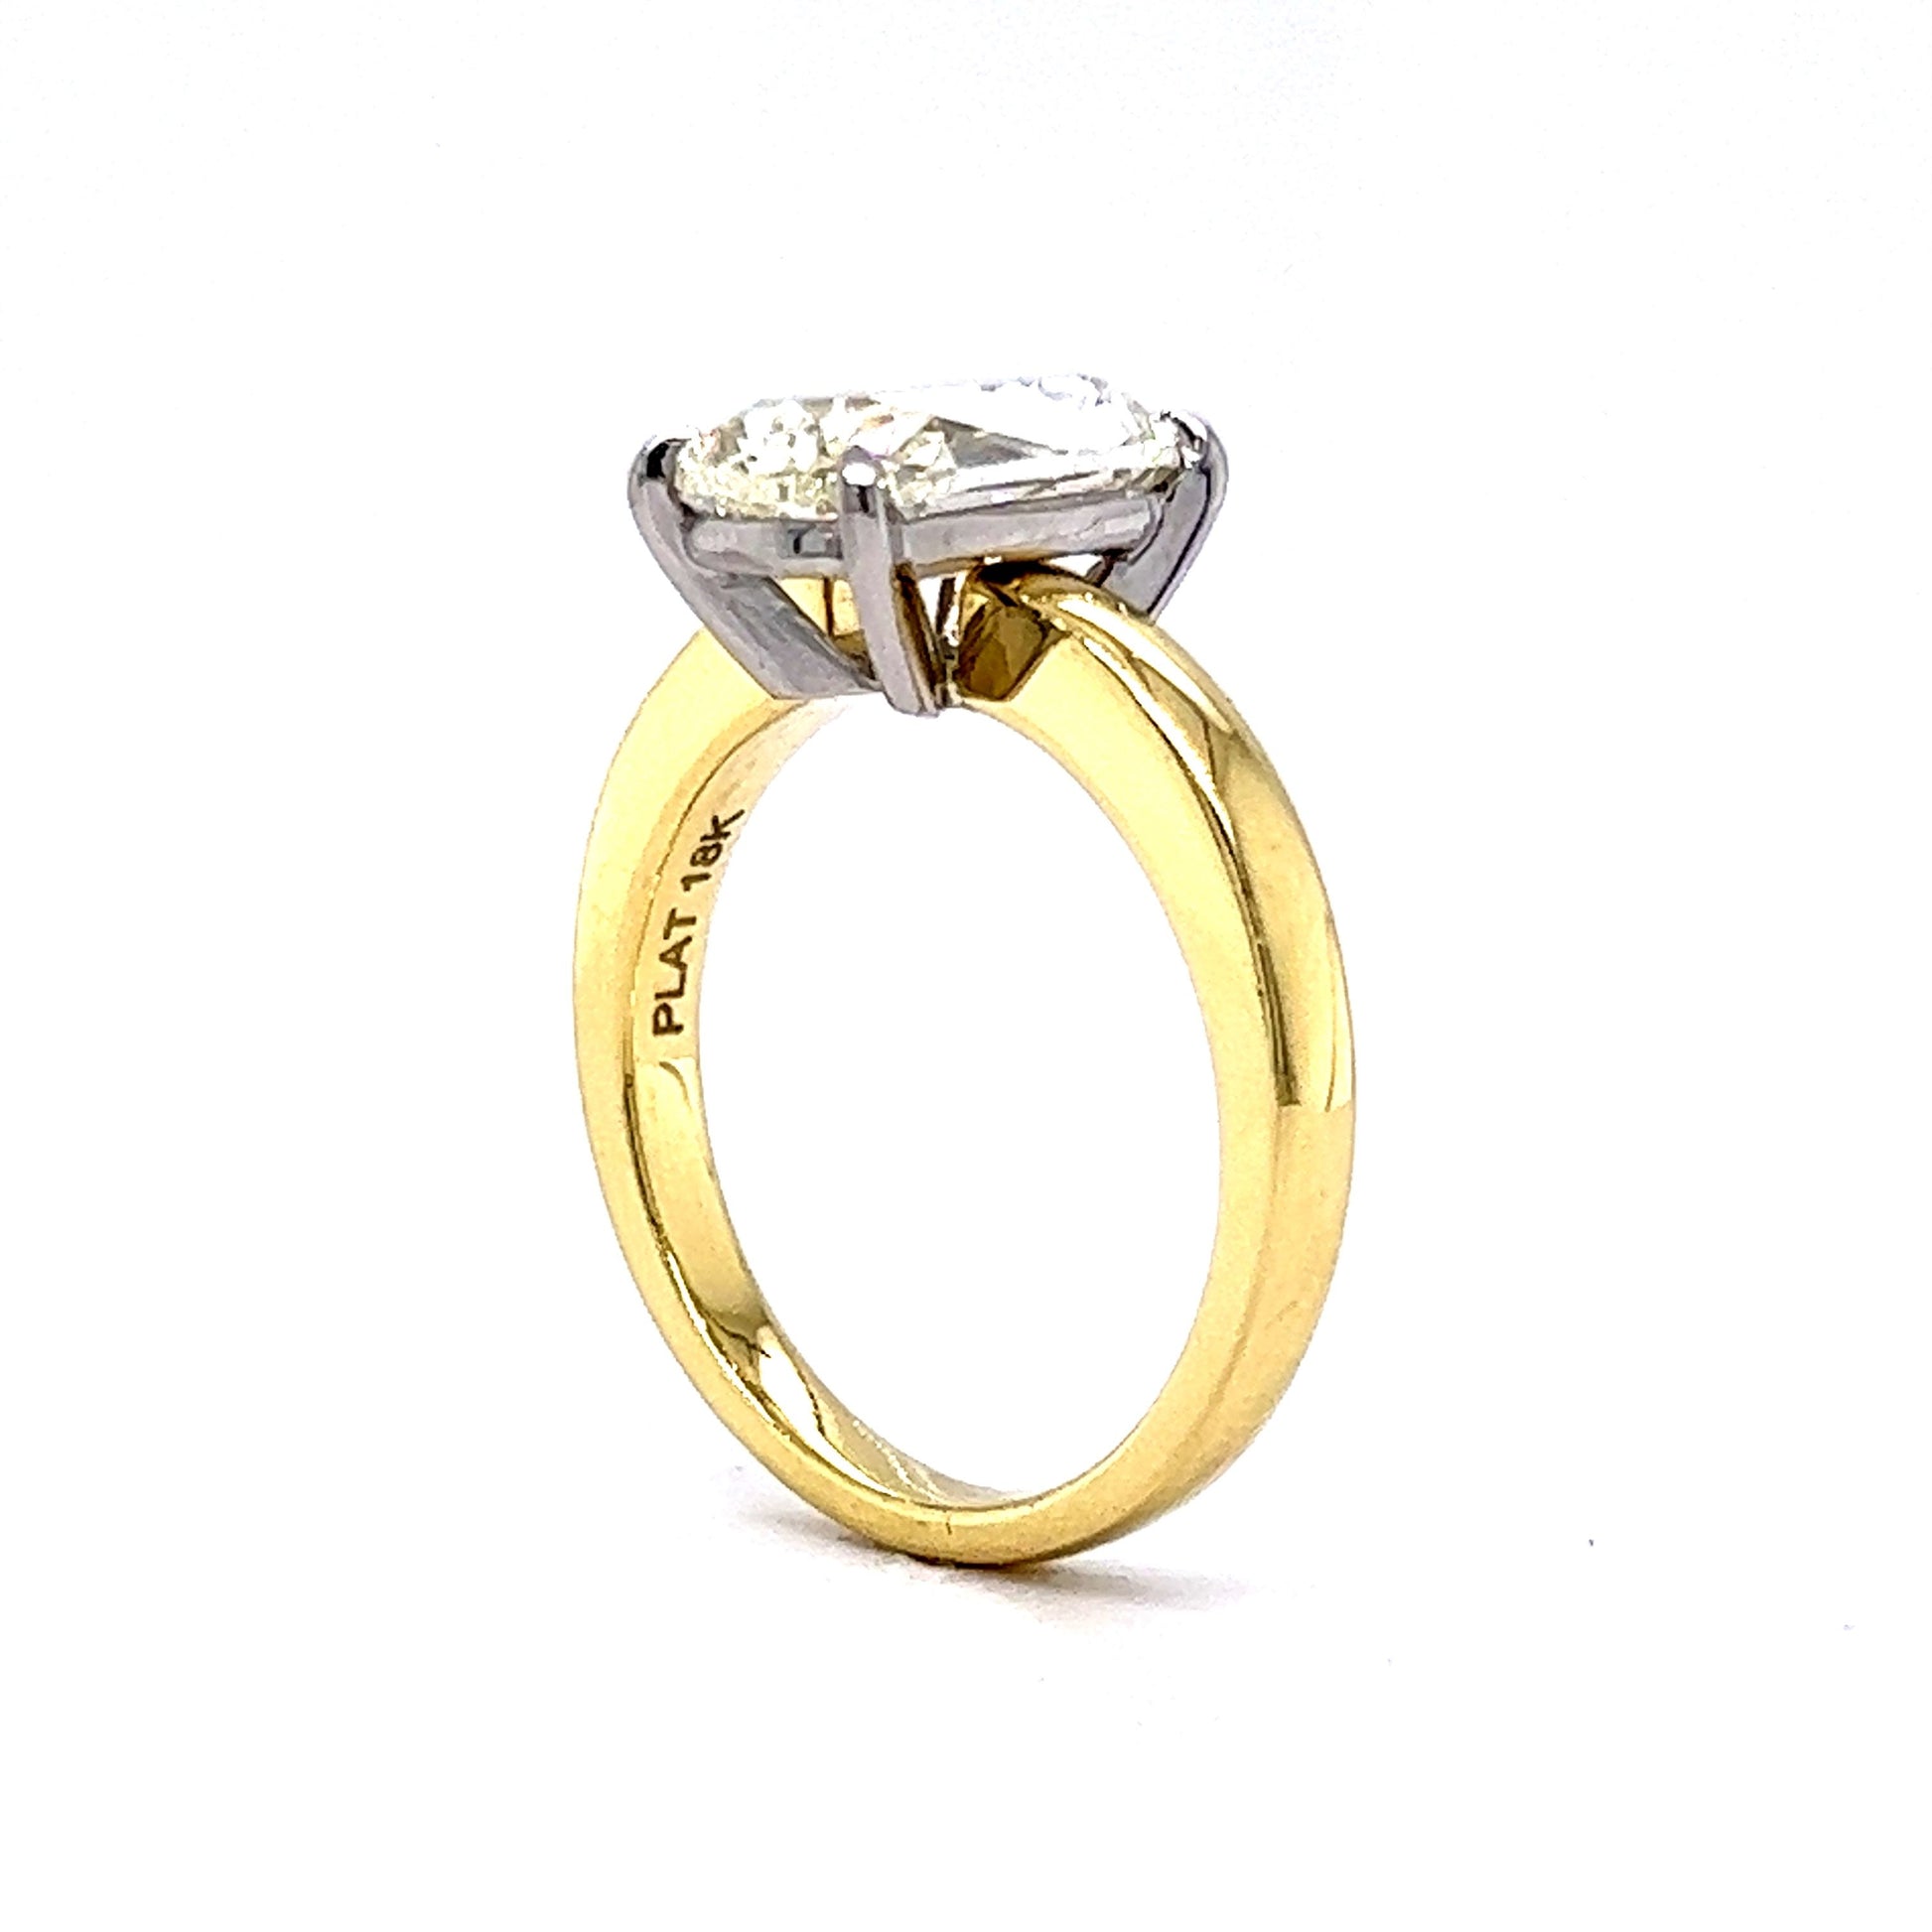 3.01 Cushion Cut Diamond Engagement Ring in 18k Yellow Gold